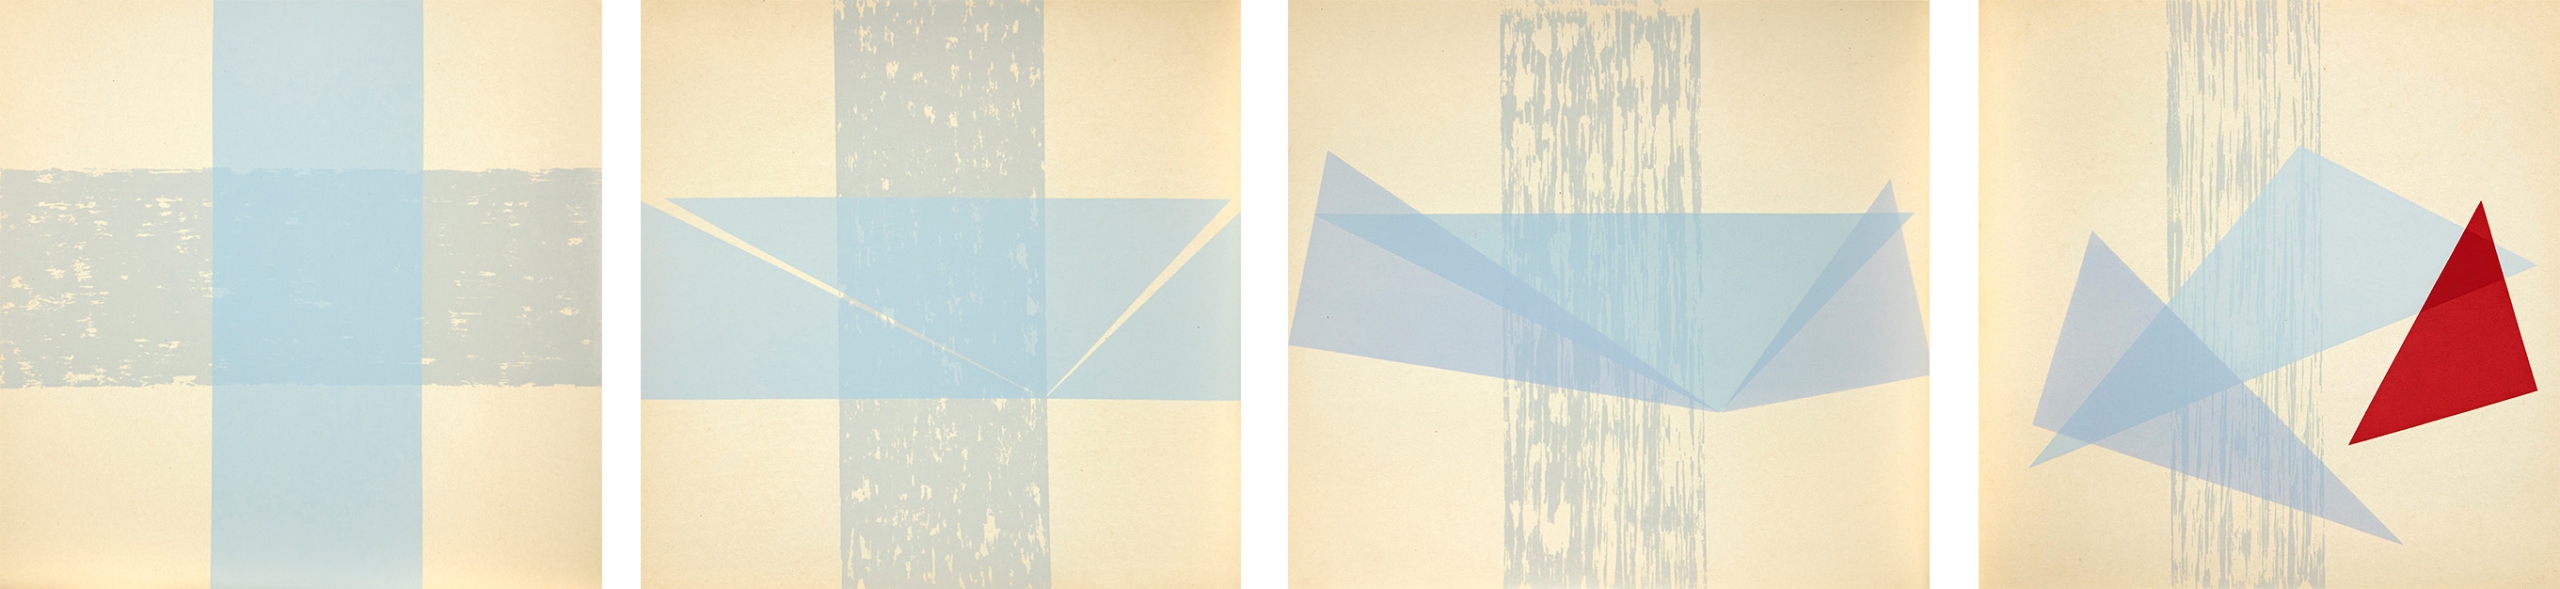 Nádler István (1938-) Compositions - Folder of 4 pieces, 1979